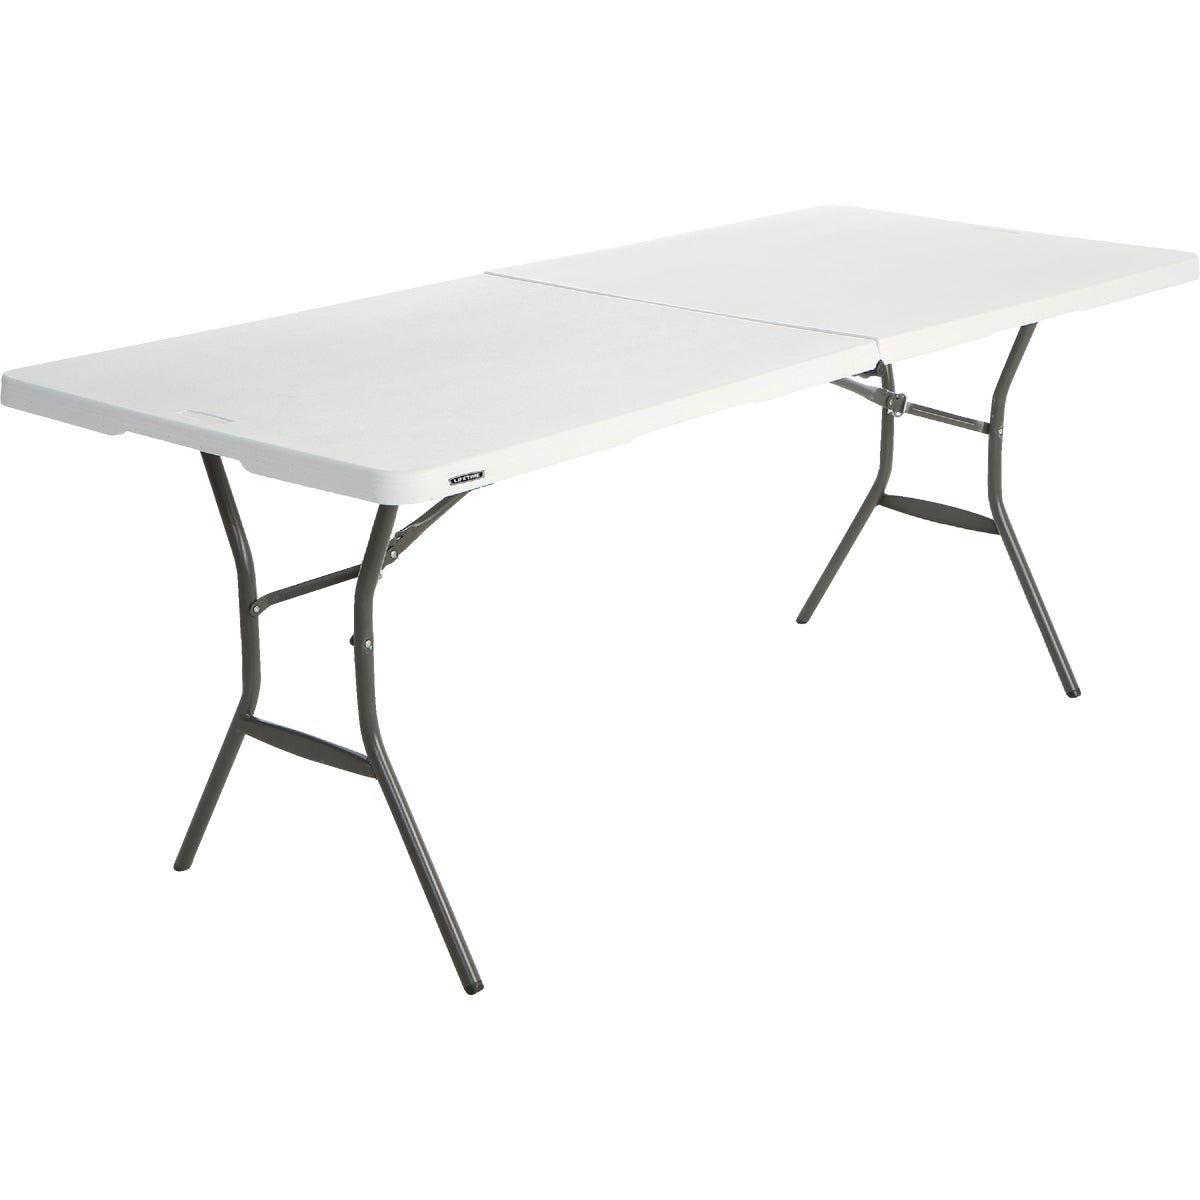 Item 602497, High-density polyethylene table has a convenient folding design for easy 